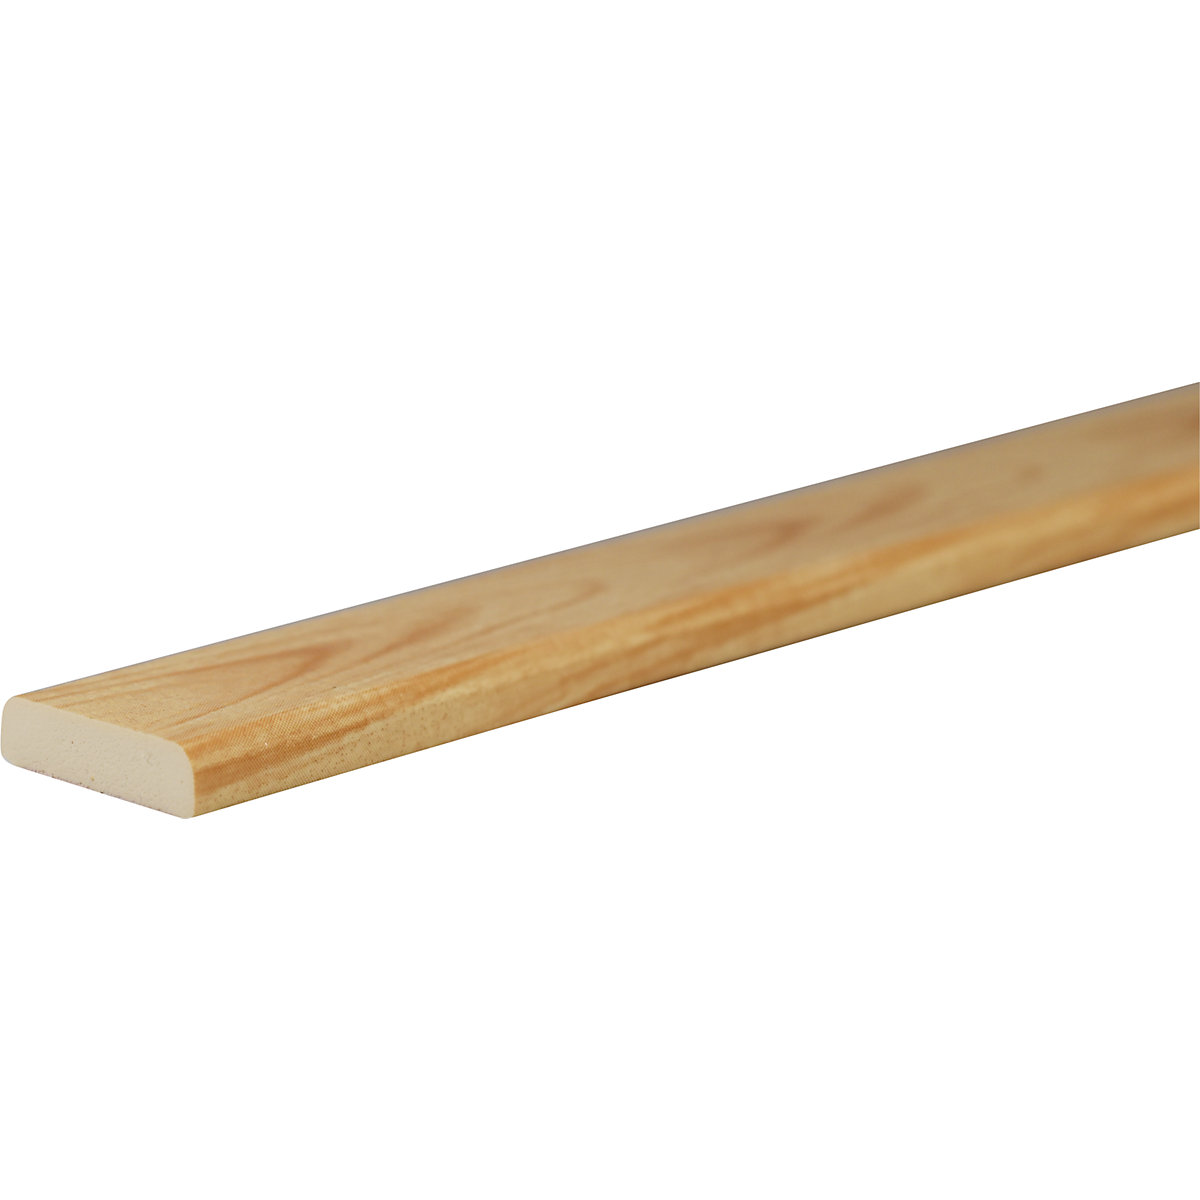 Knuffi®-oppervlaktebescherming – SHG, type F, stuk van 1 m, gecoat hout naturel-18